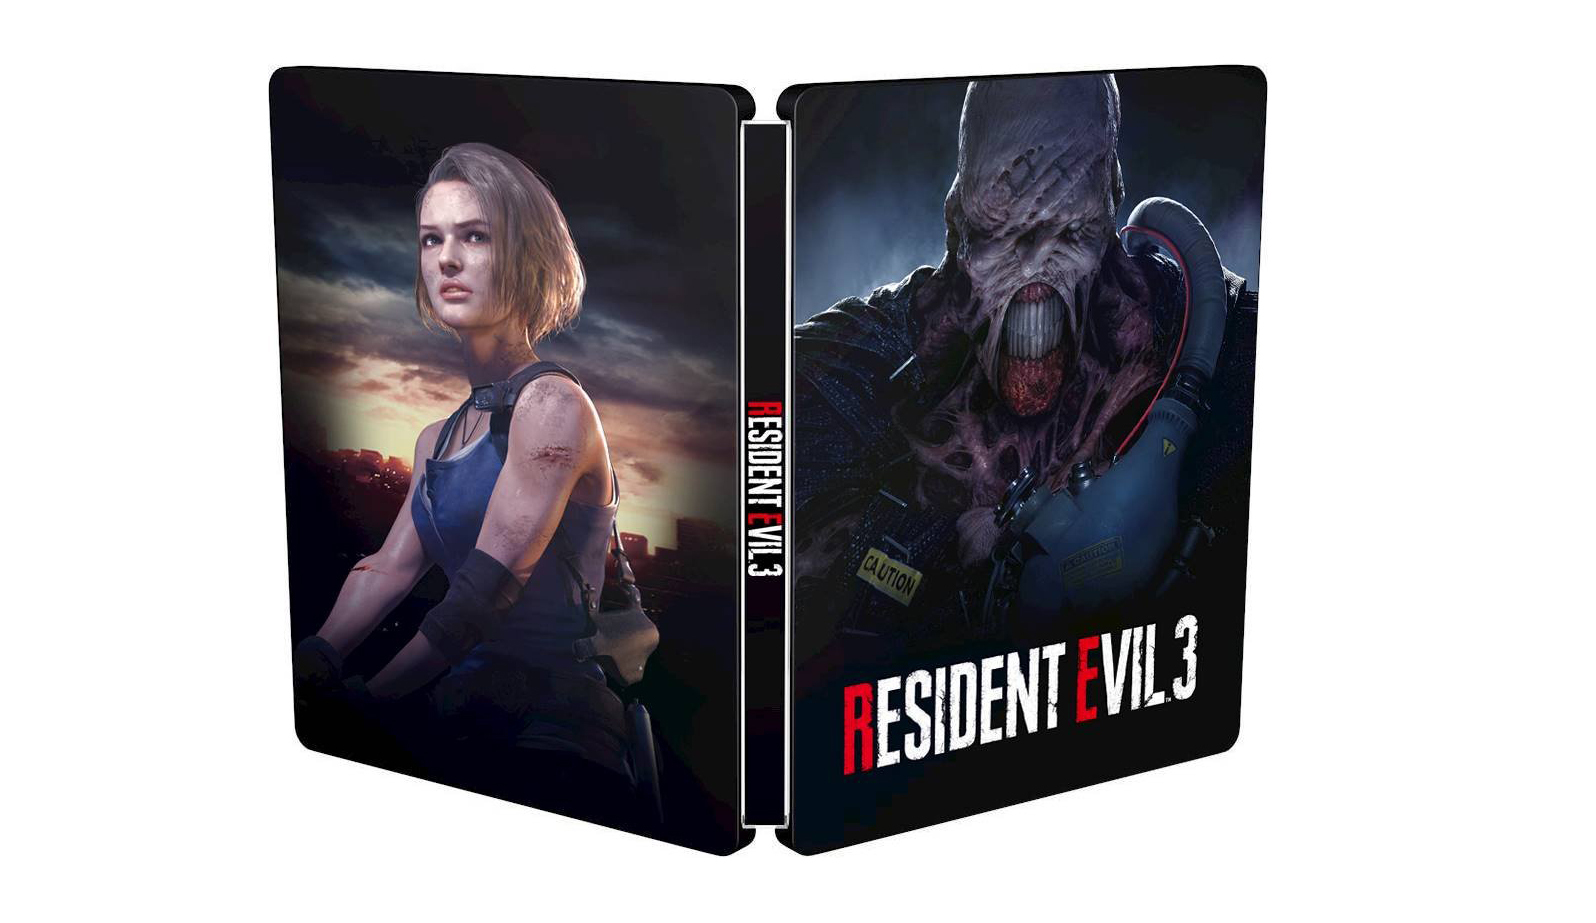 Resident evil 3 ps5. Resident Evil 4 - Steelbook Edition ps2. Steelbook ps2 Resident Evil. Resident Evil 4 Remake Steelbook.